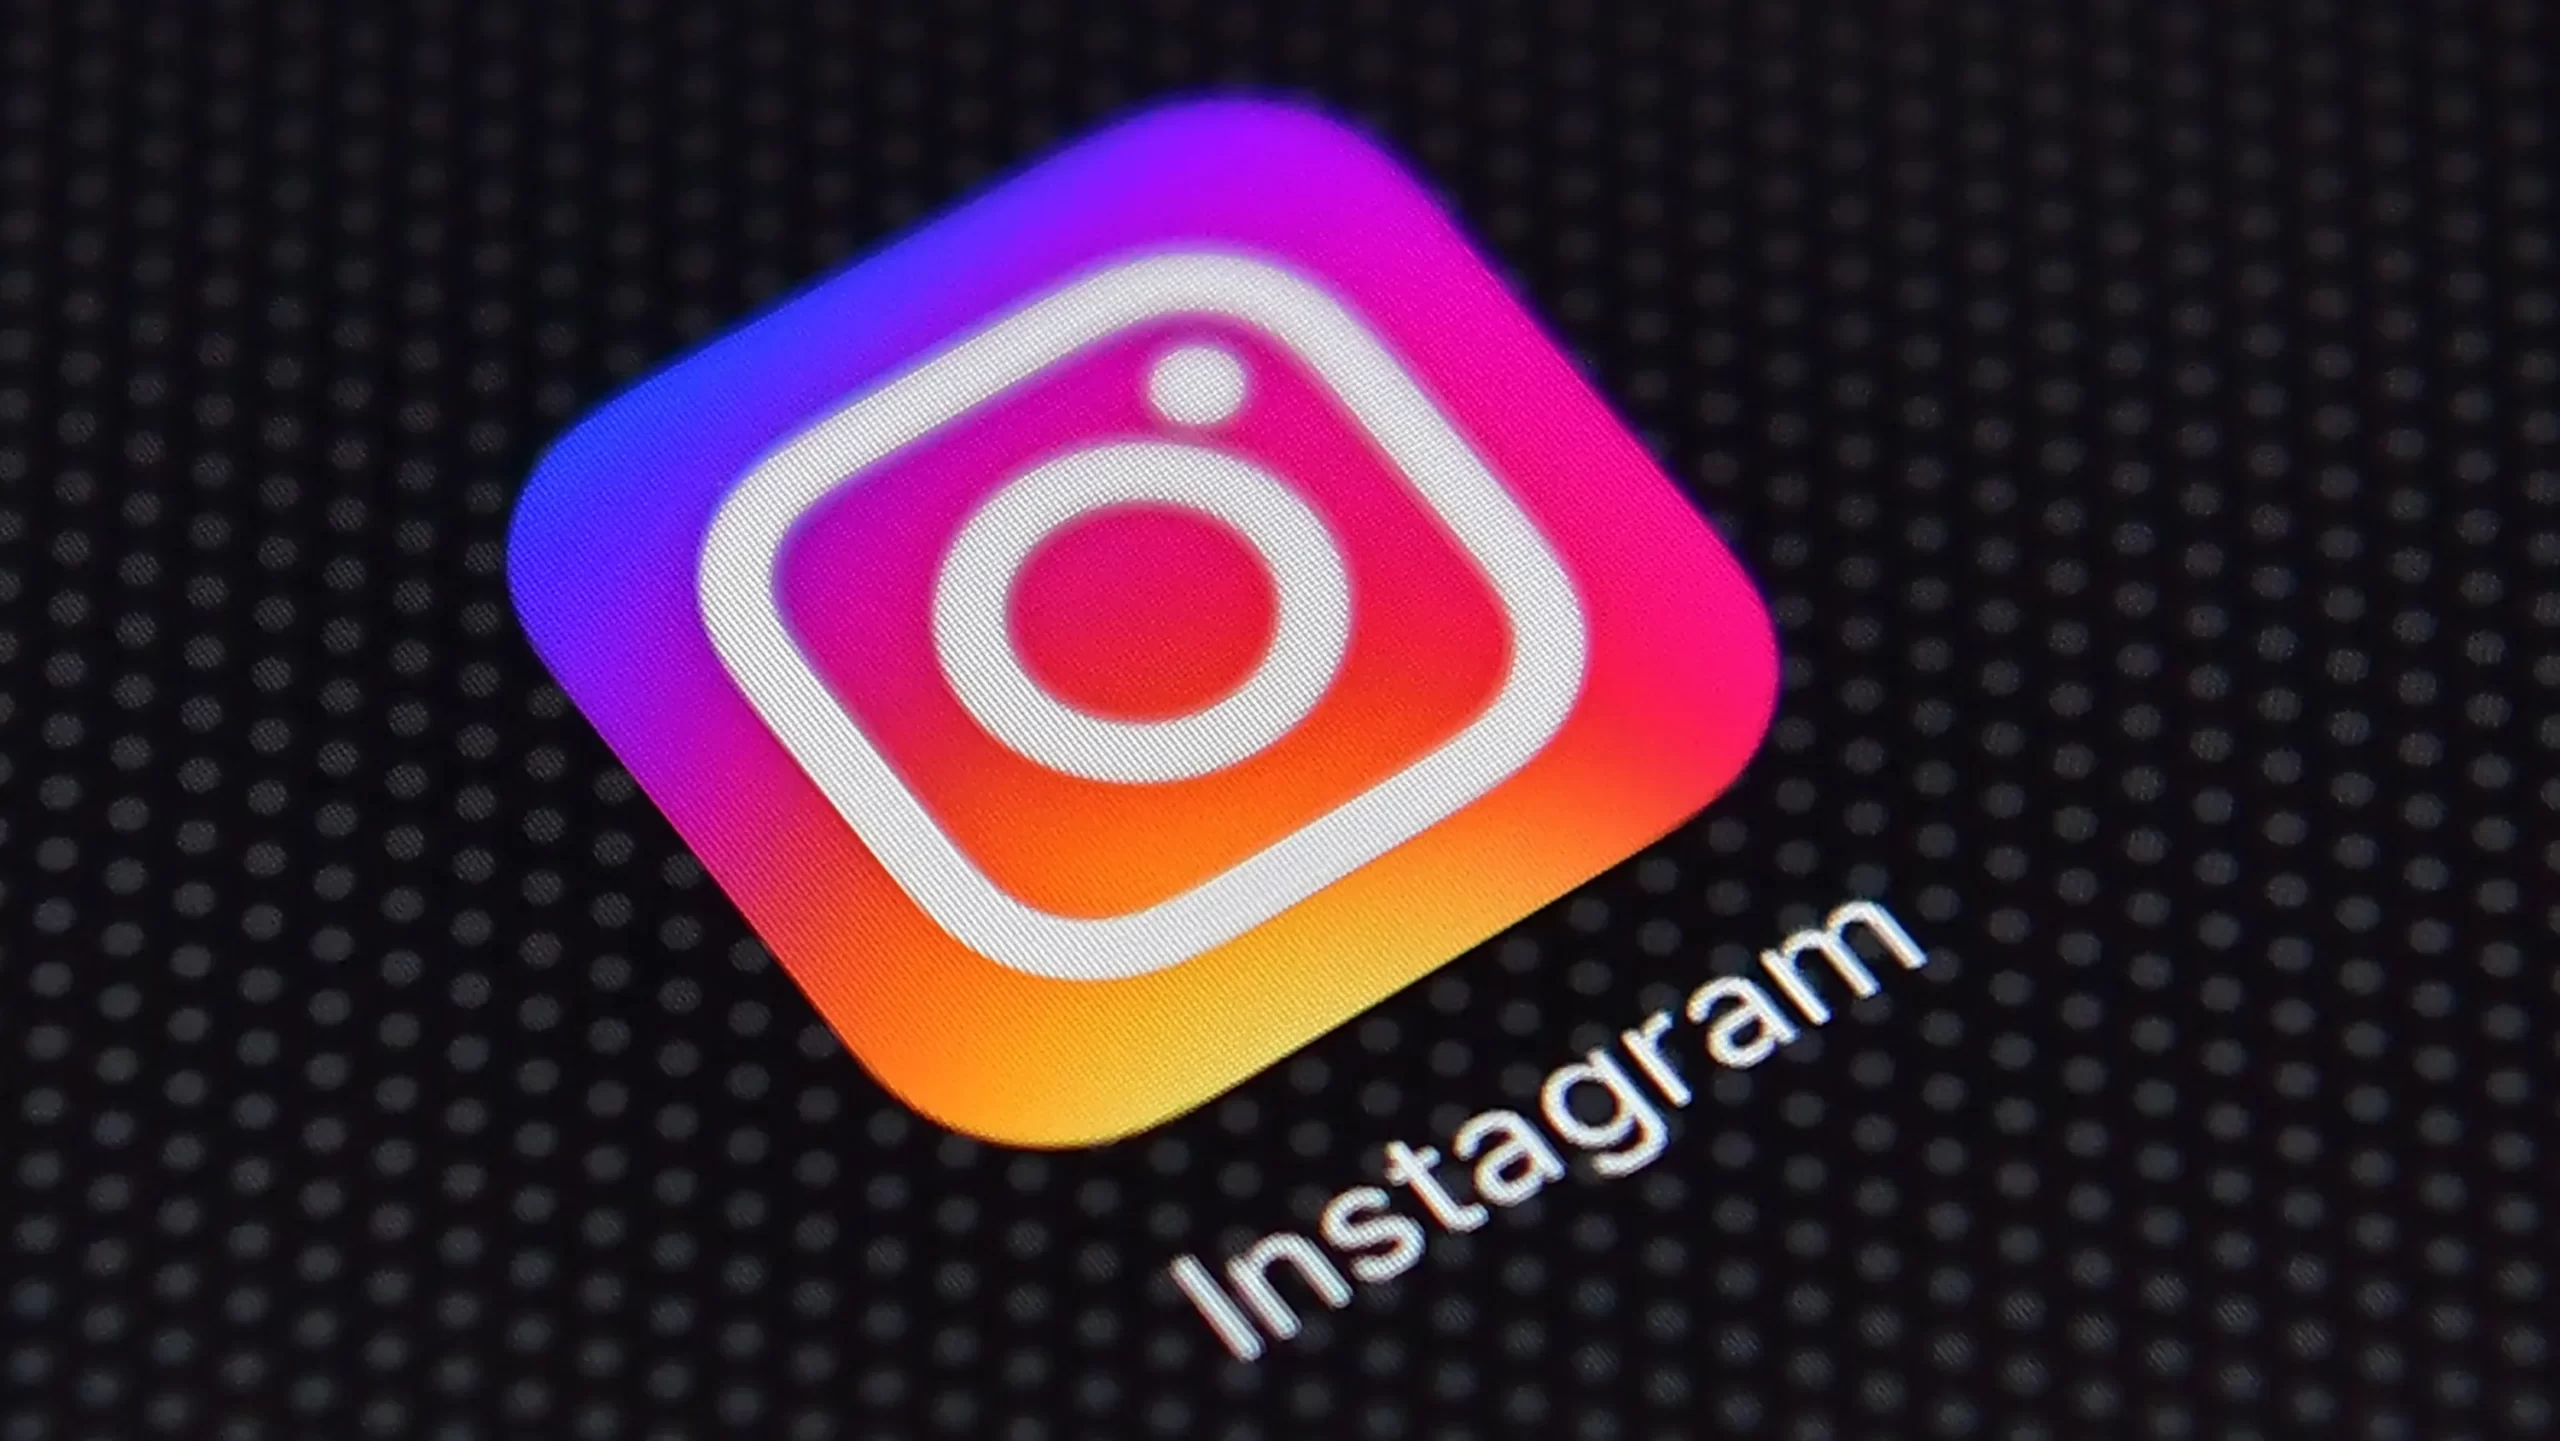 Instagram met fin aux recommandations de contenu politique